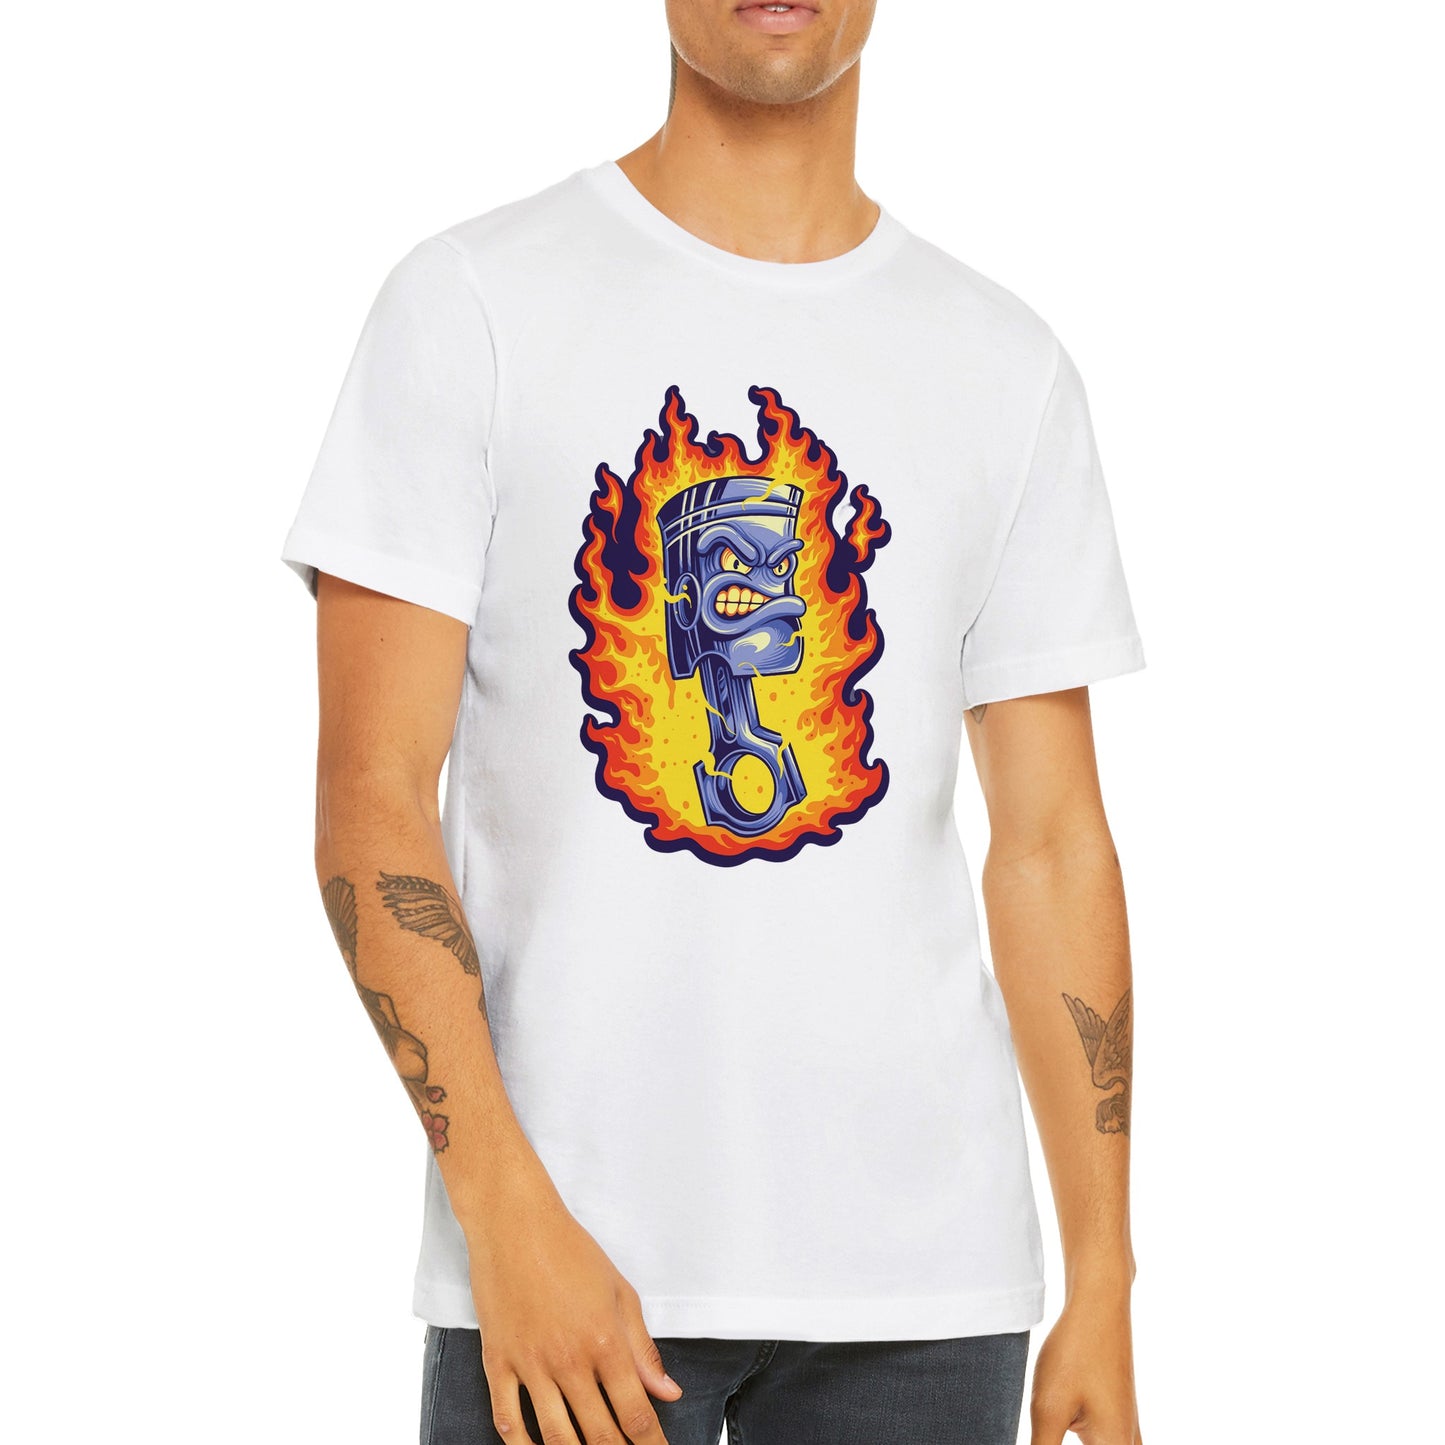 Piston on Fire T-shirt